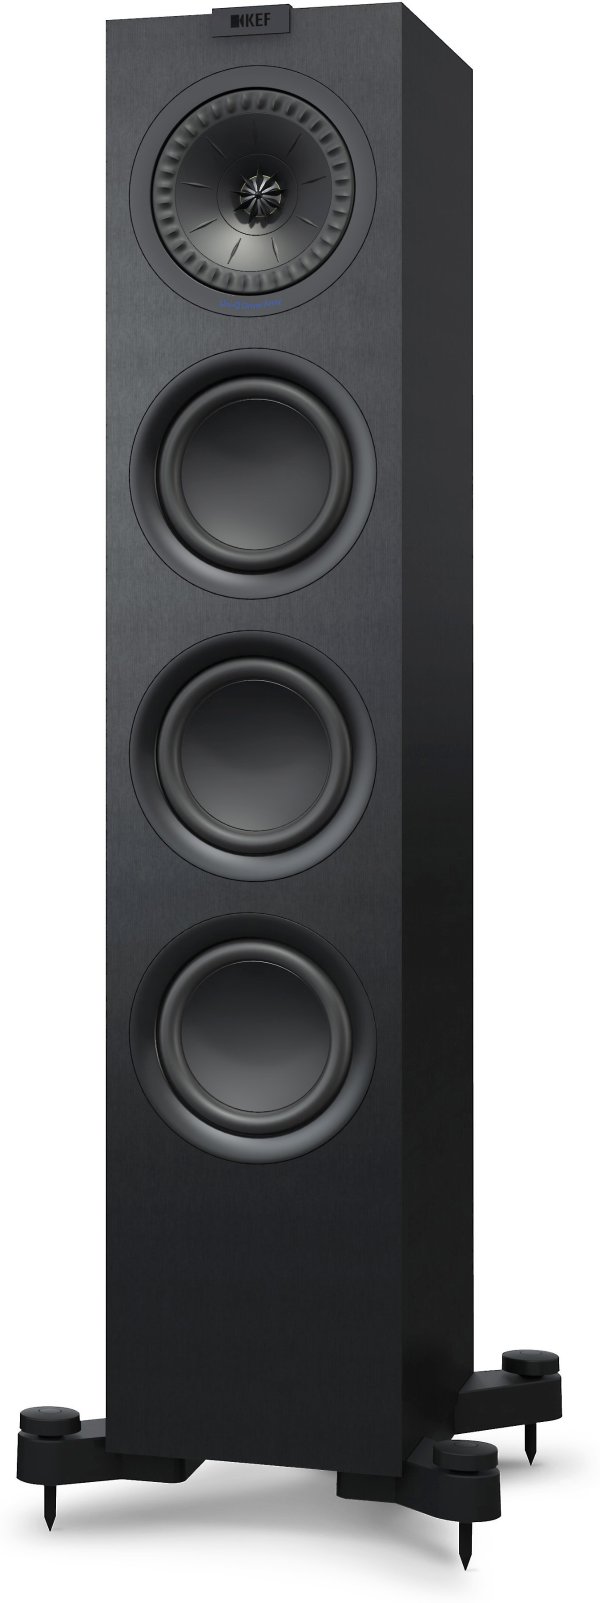 KEF Q550 (Satin Black) Floor-standing speaker at Crutchfield